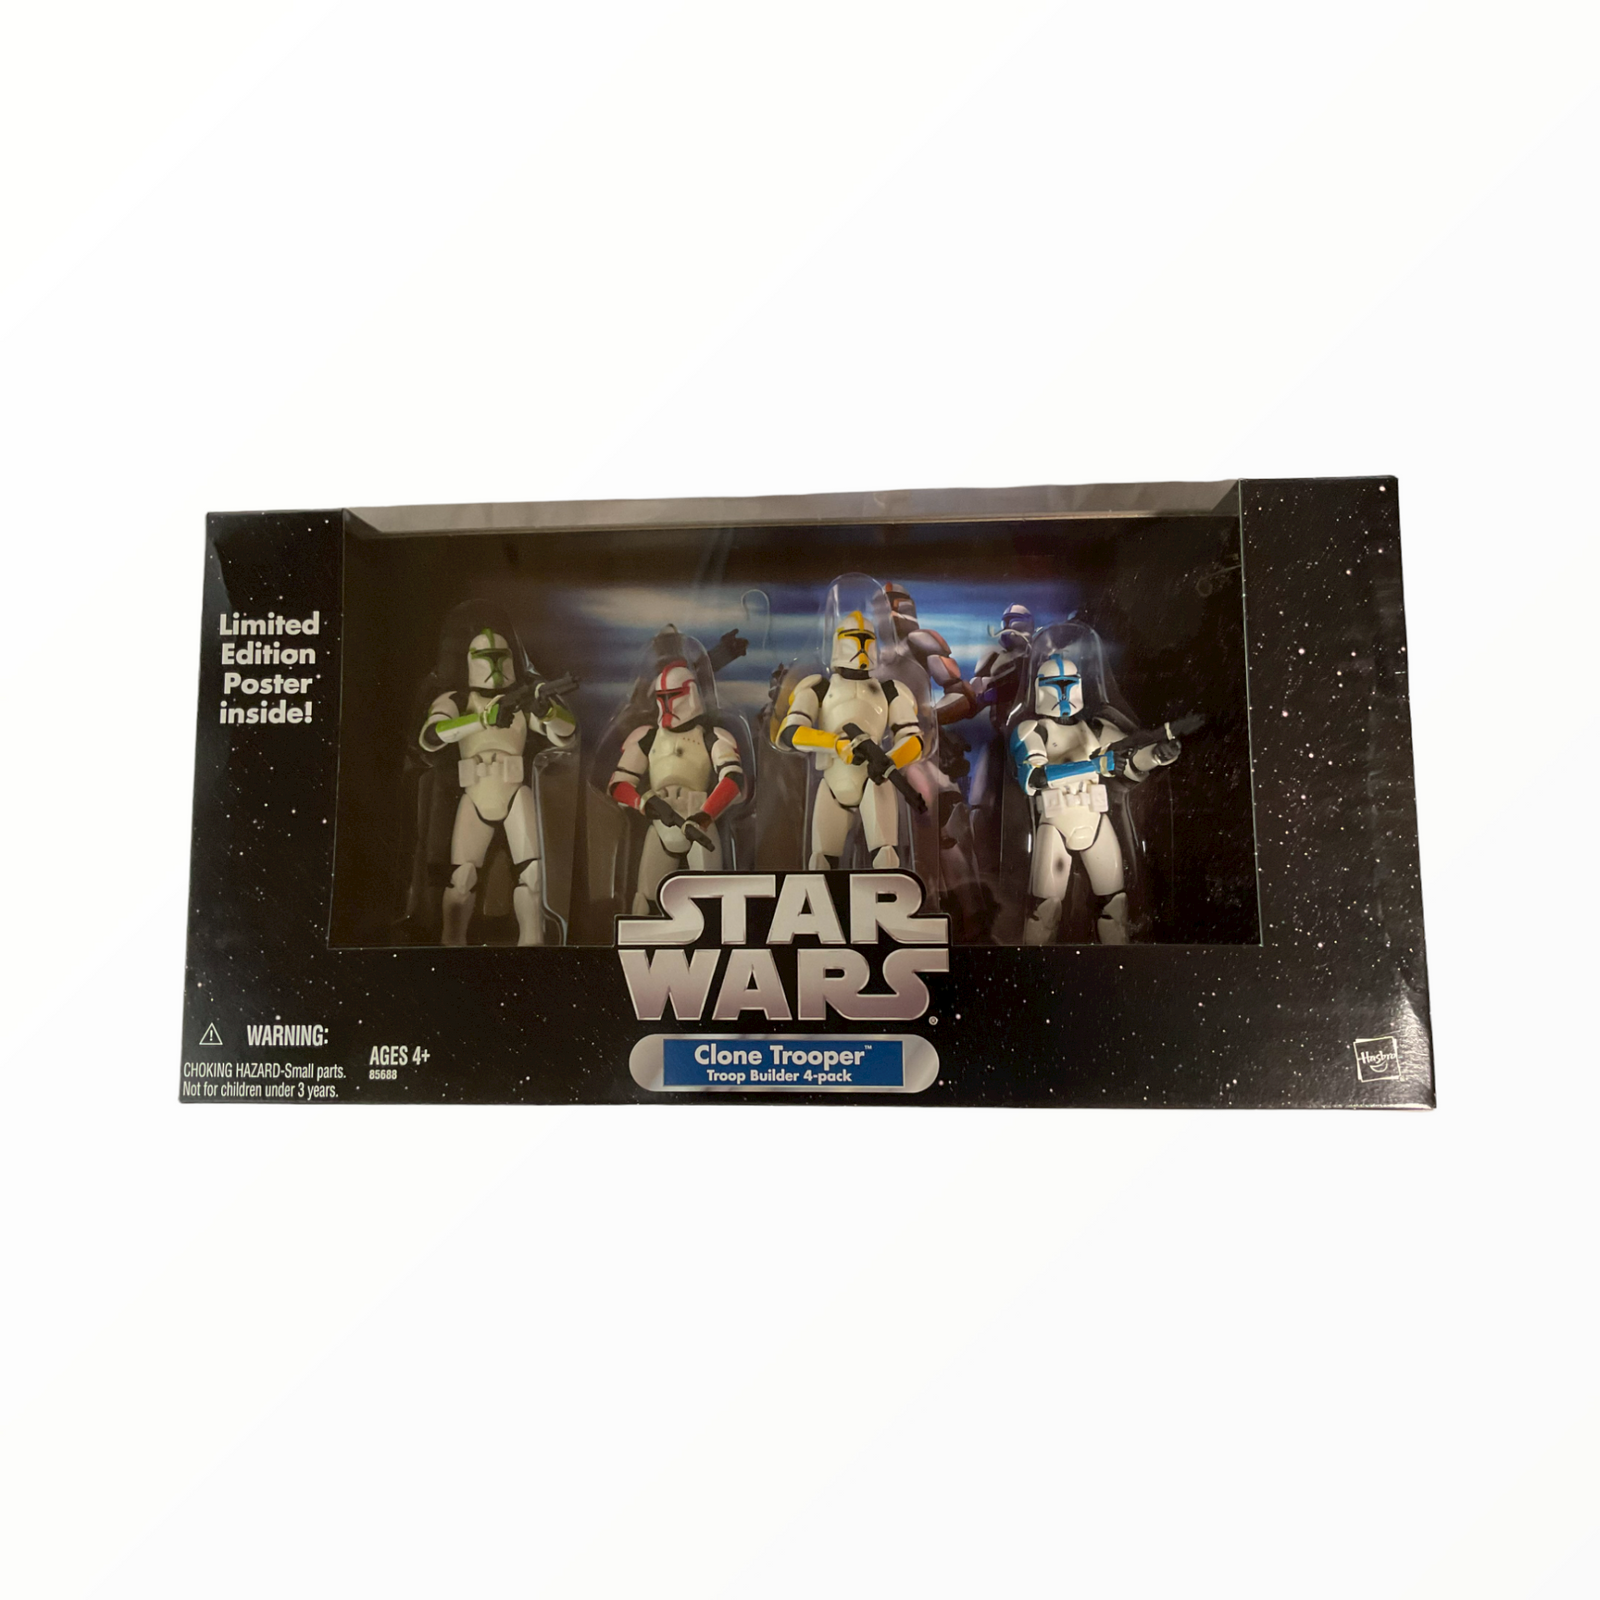 Star Wars Clone trooper 4-pack white exclusive w/battle damage